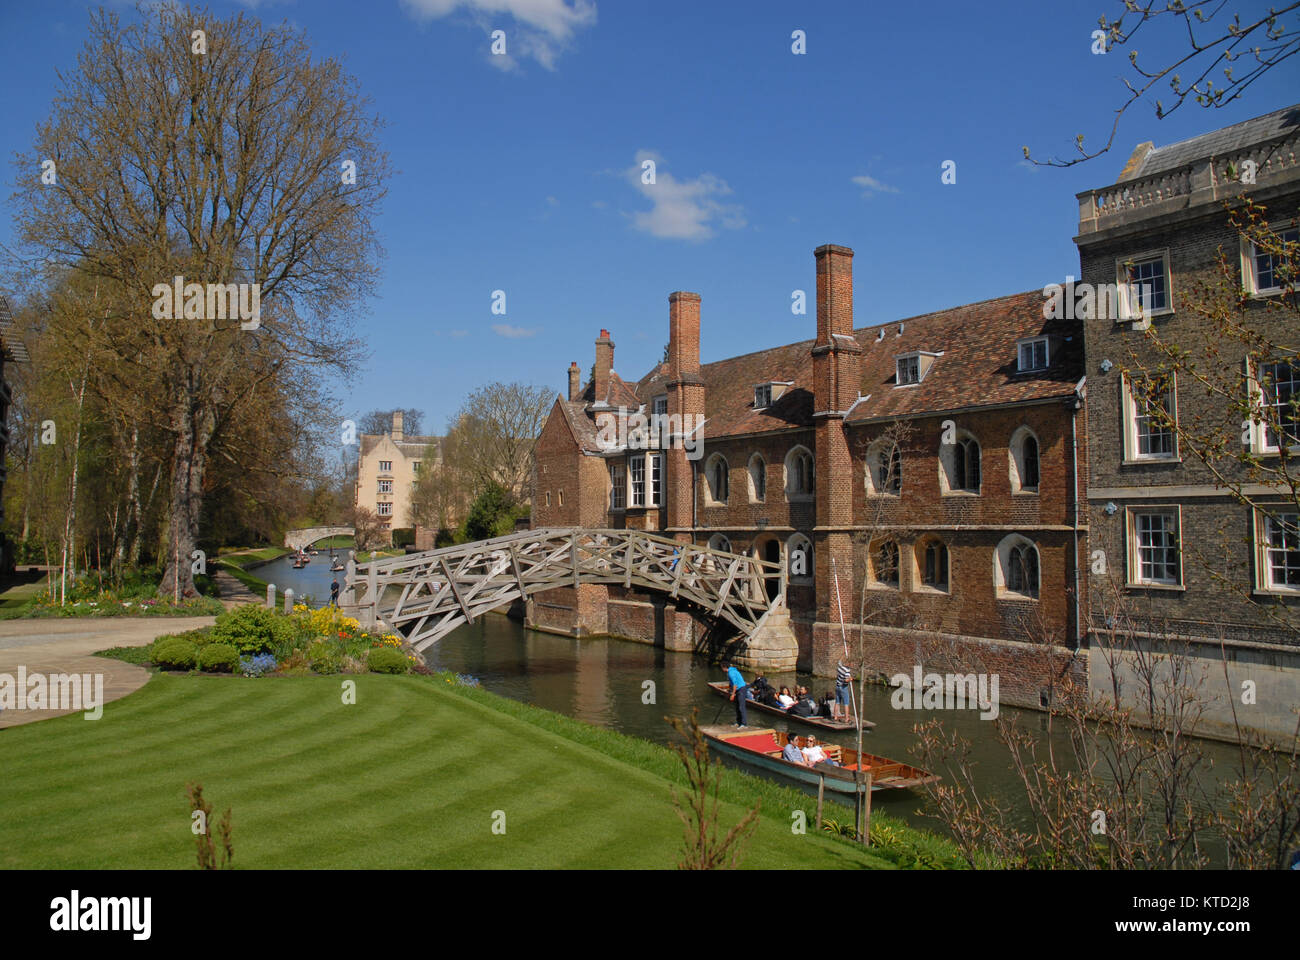 Cambridge, United Kingdom - April 18, 2015: Punting boat at the Mathematical bridge Stock Photo